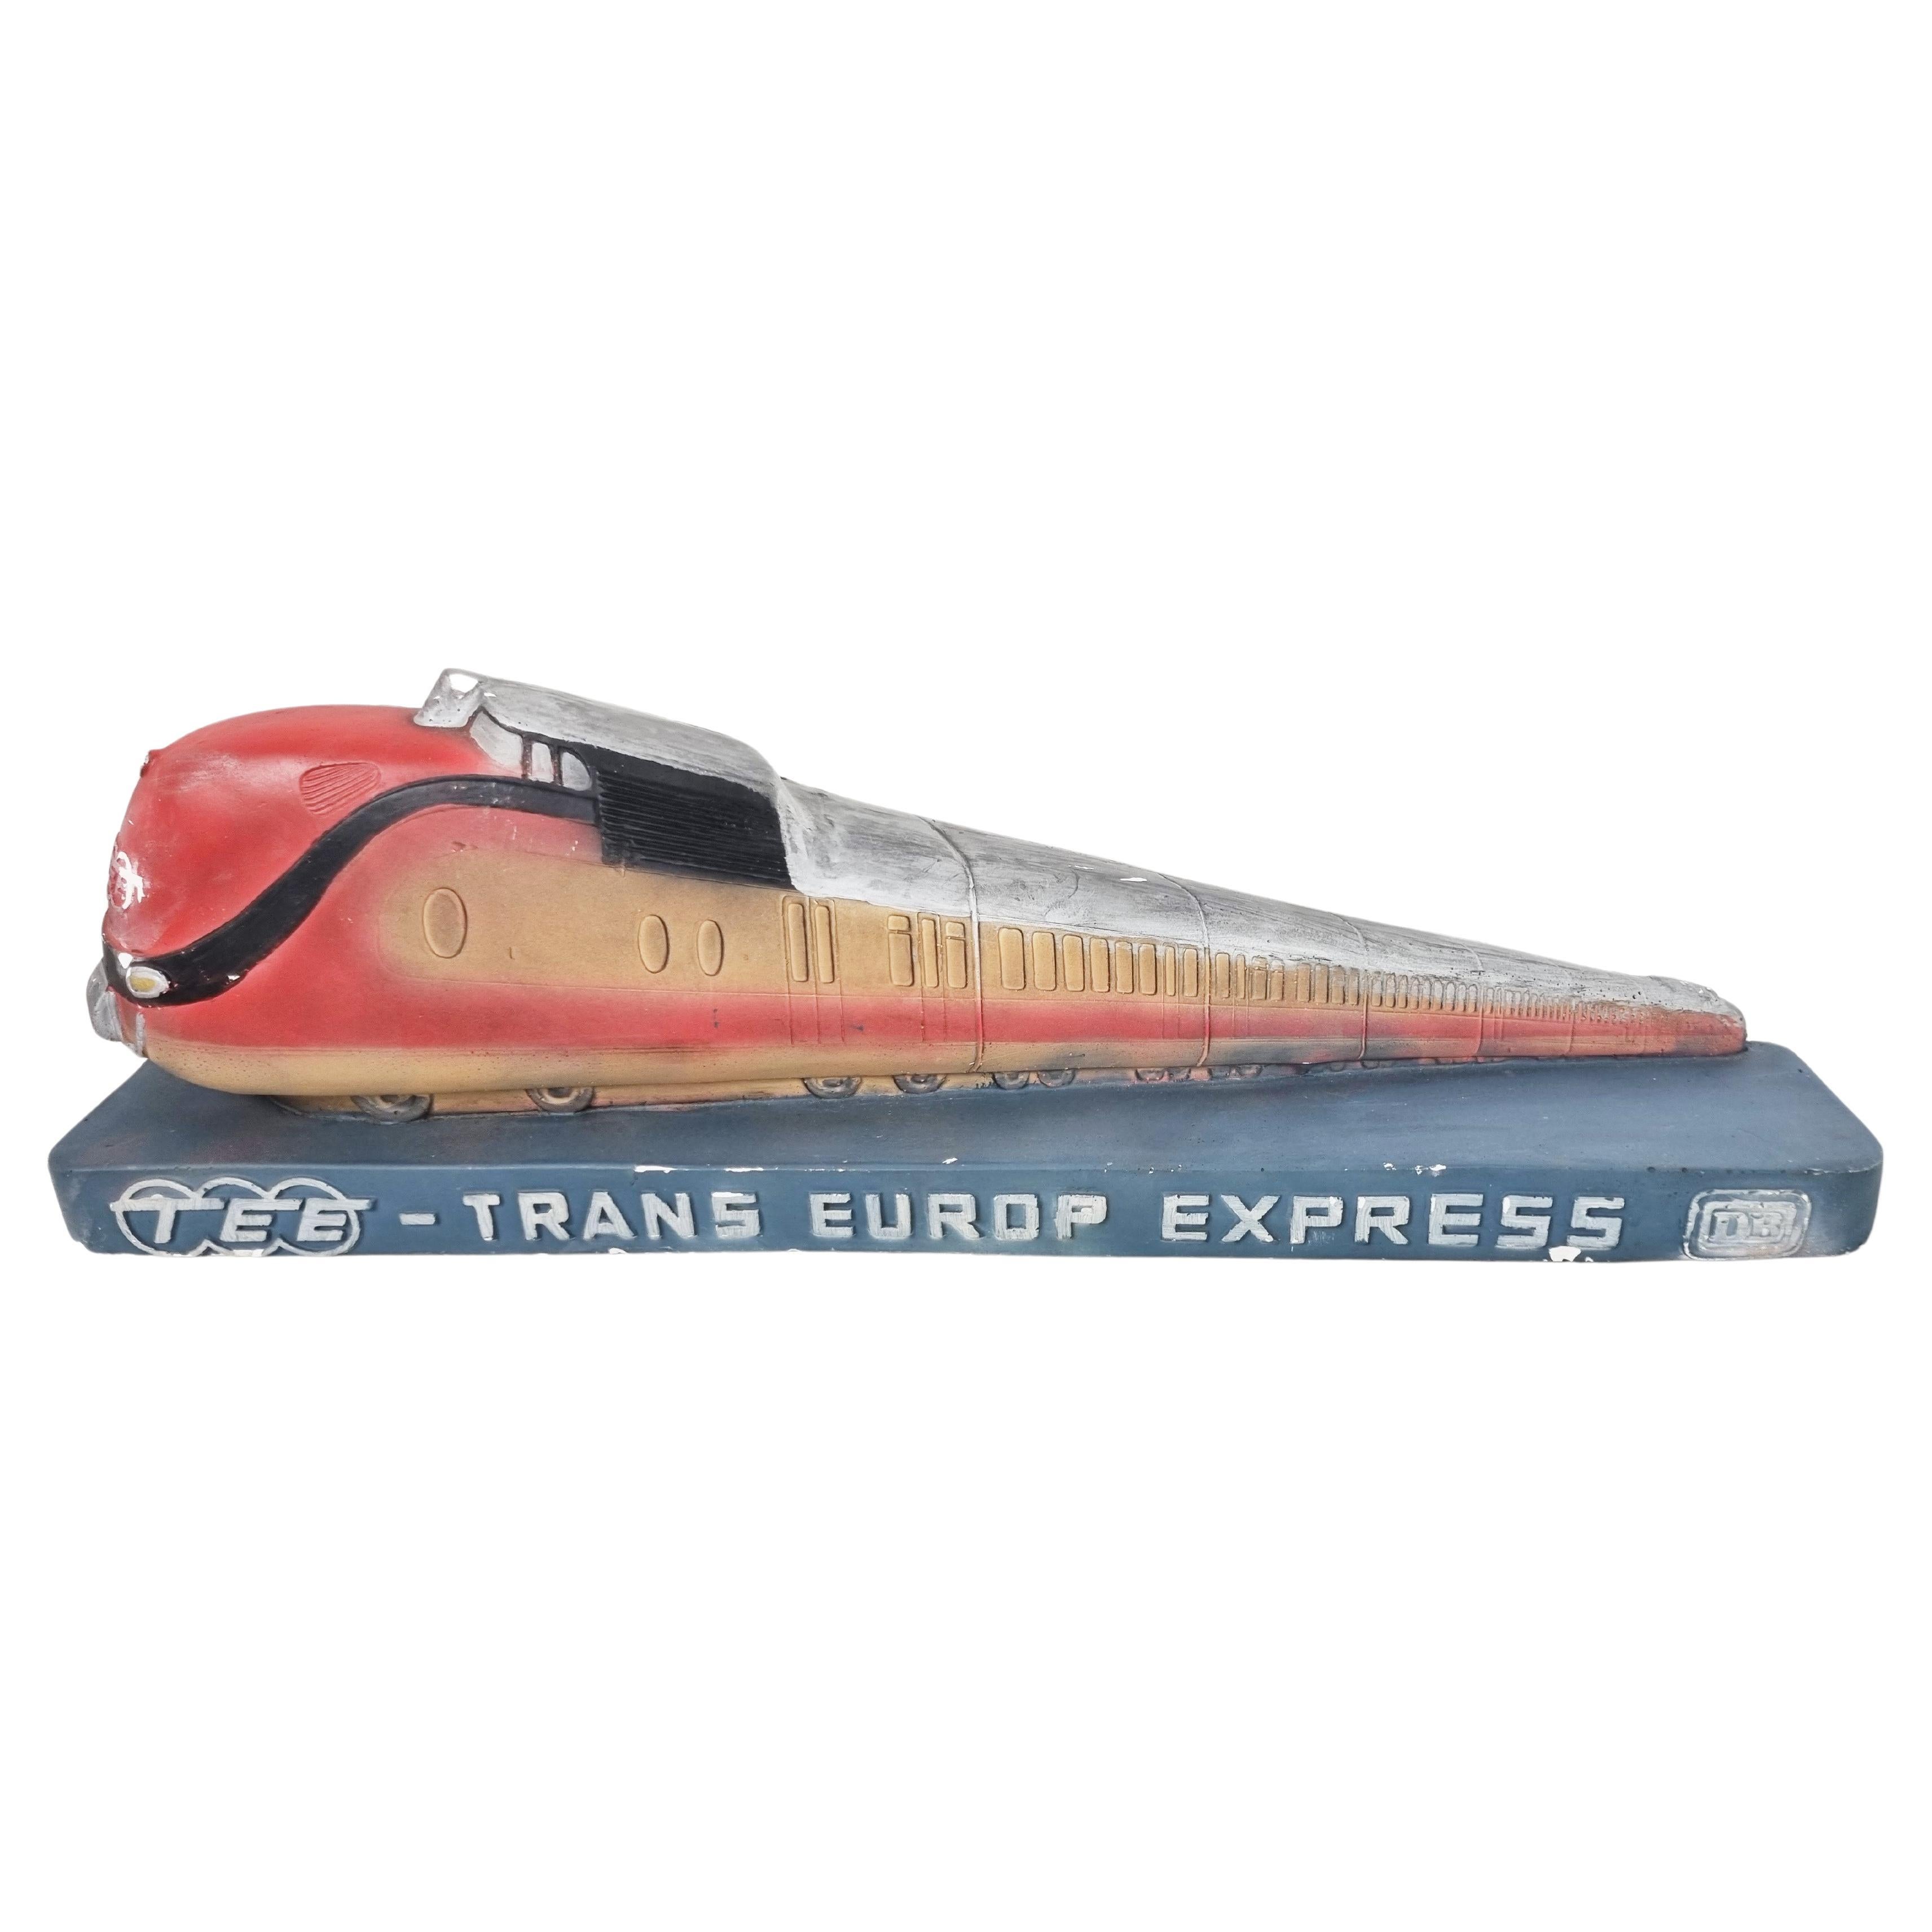 Trans Europ Express Rare Streamlined Plaster Train Display, 1960s